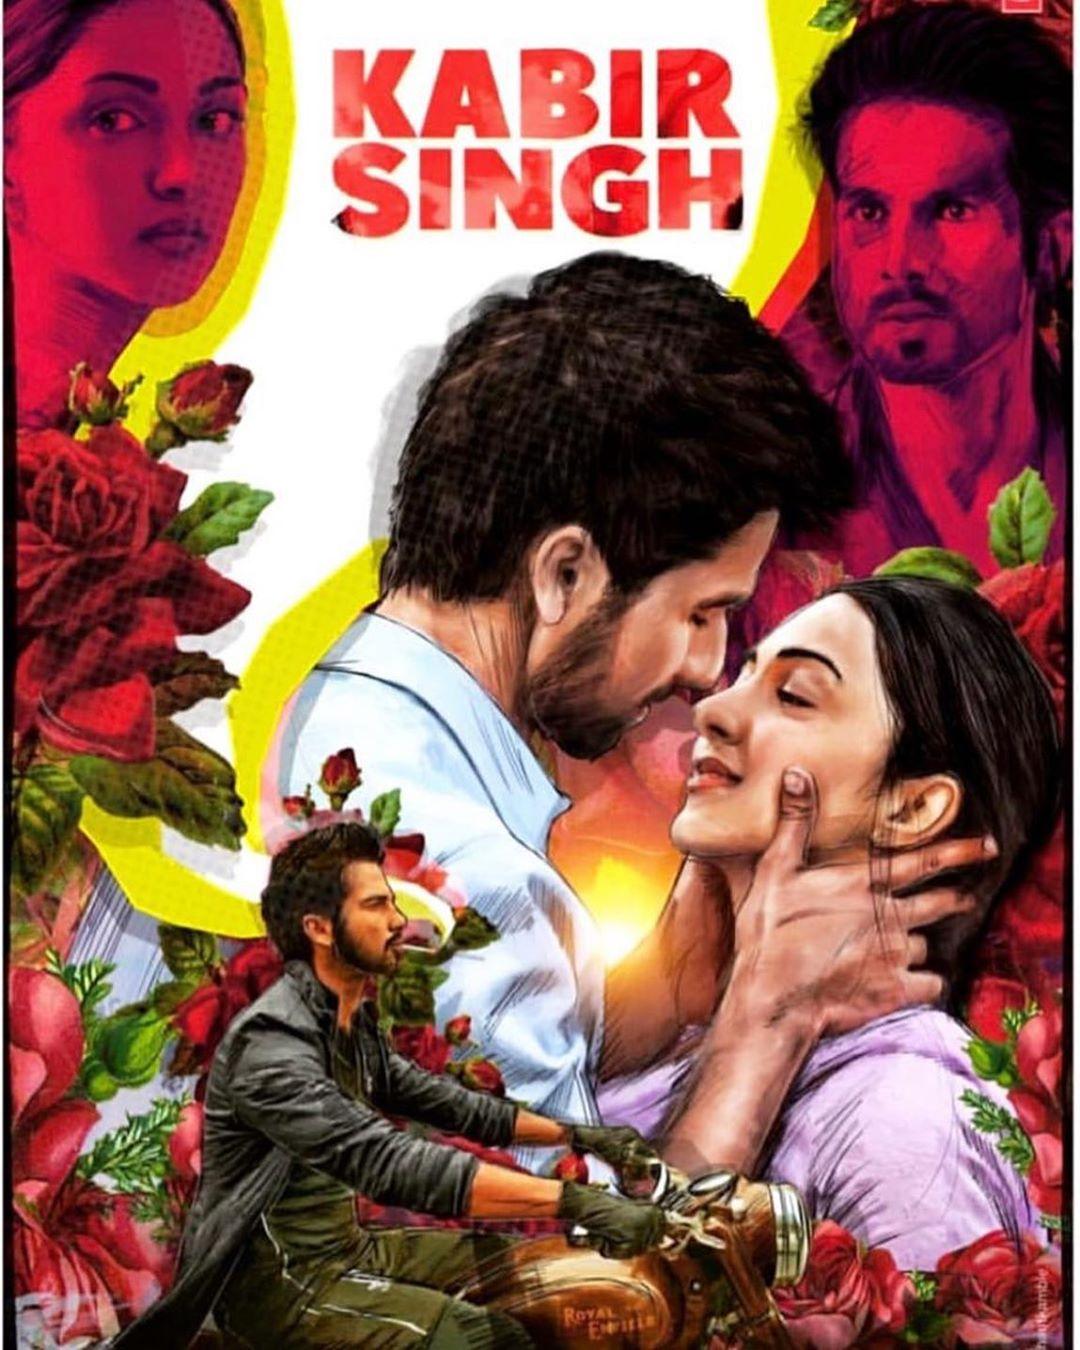 Kabir Singh scores a sensational ₹ 235 crore at the domestic box